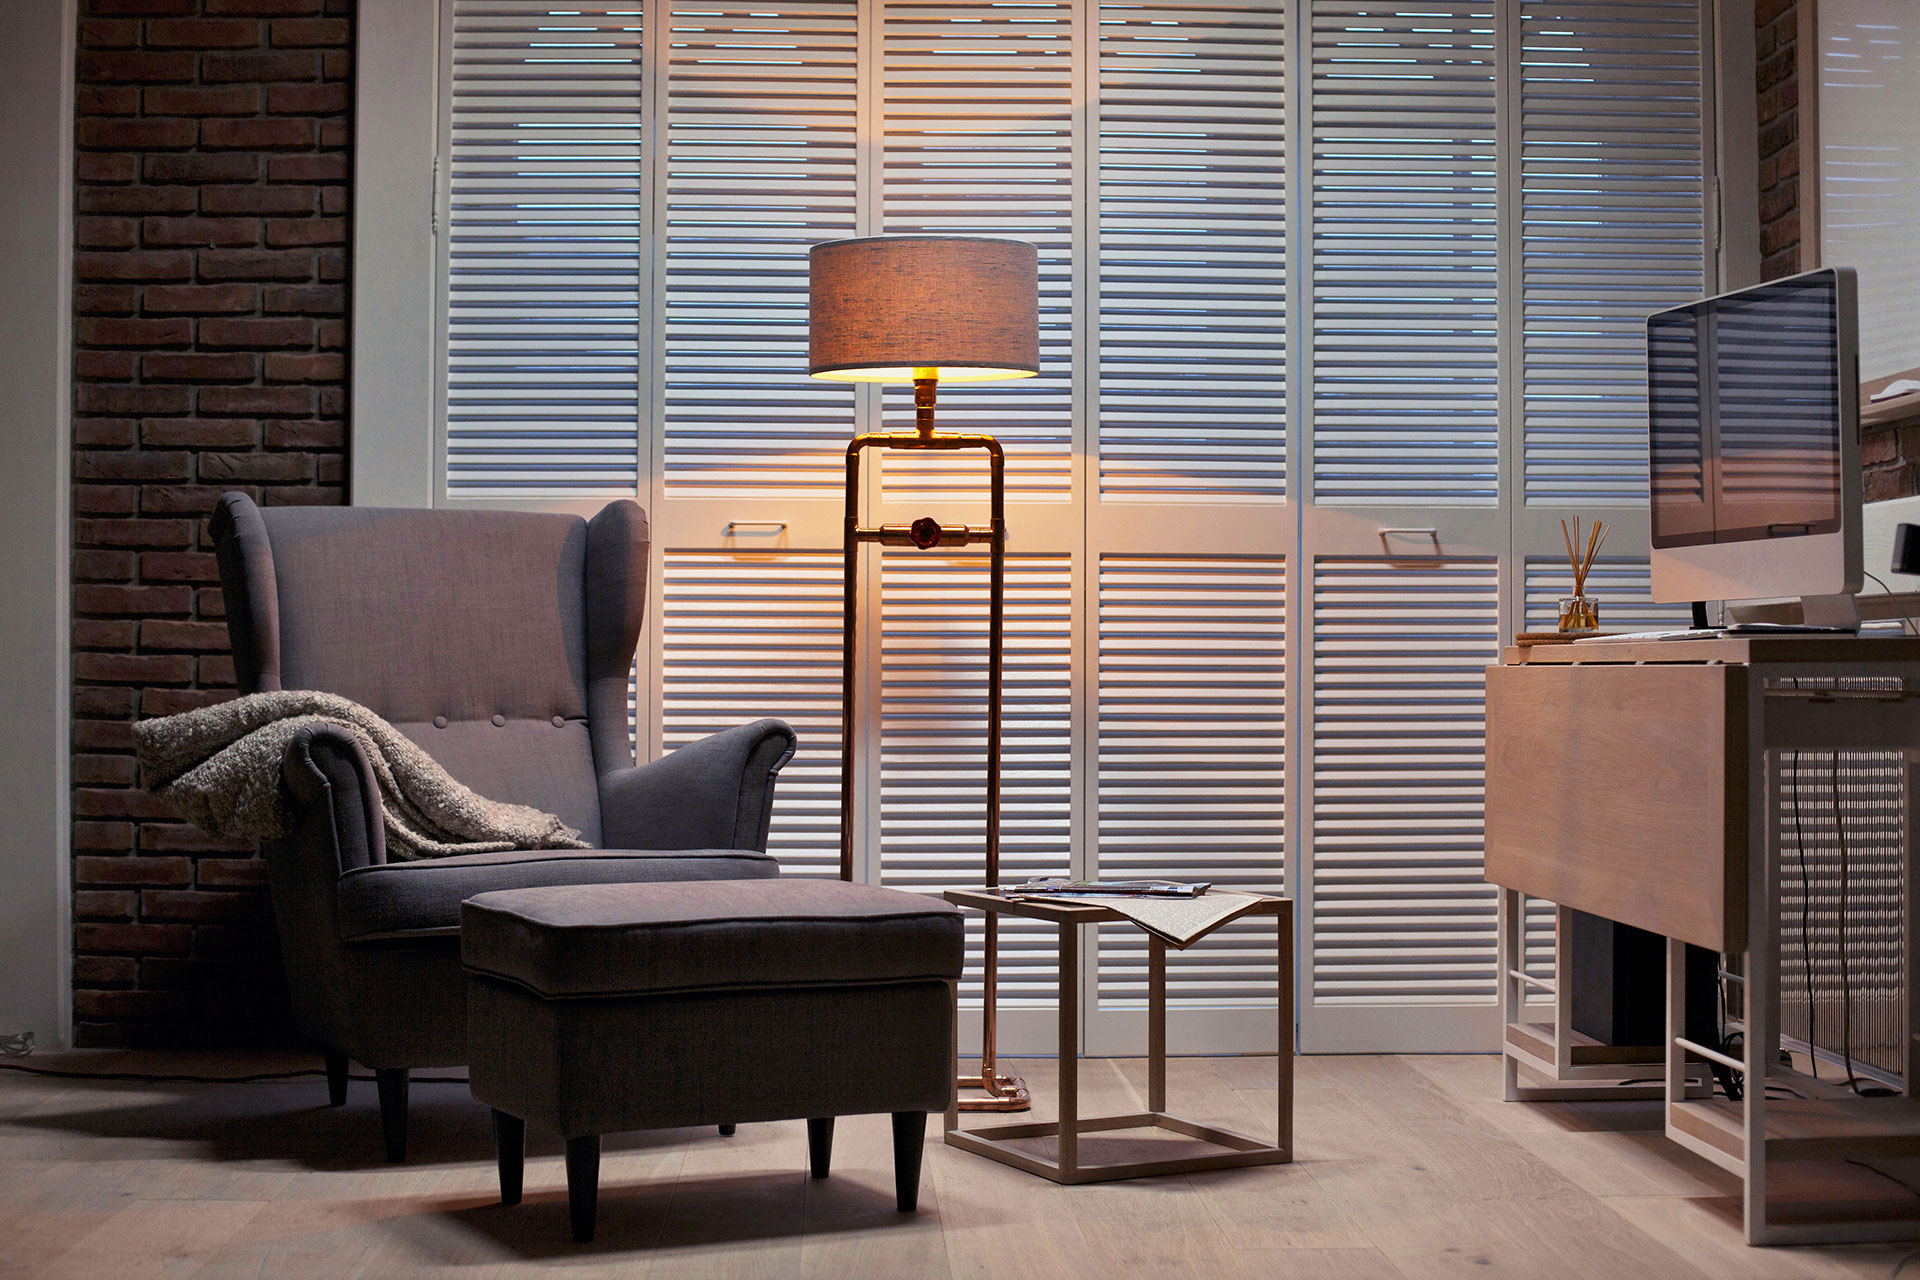 Industrial design floor lamp in trendy copper or modern brass in downtown loft apartment